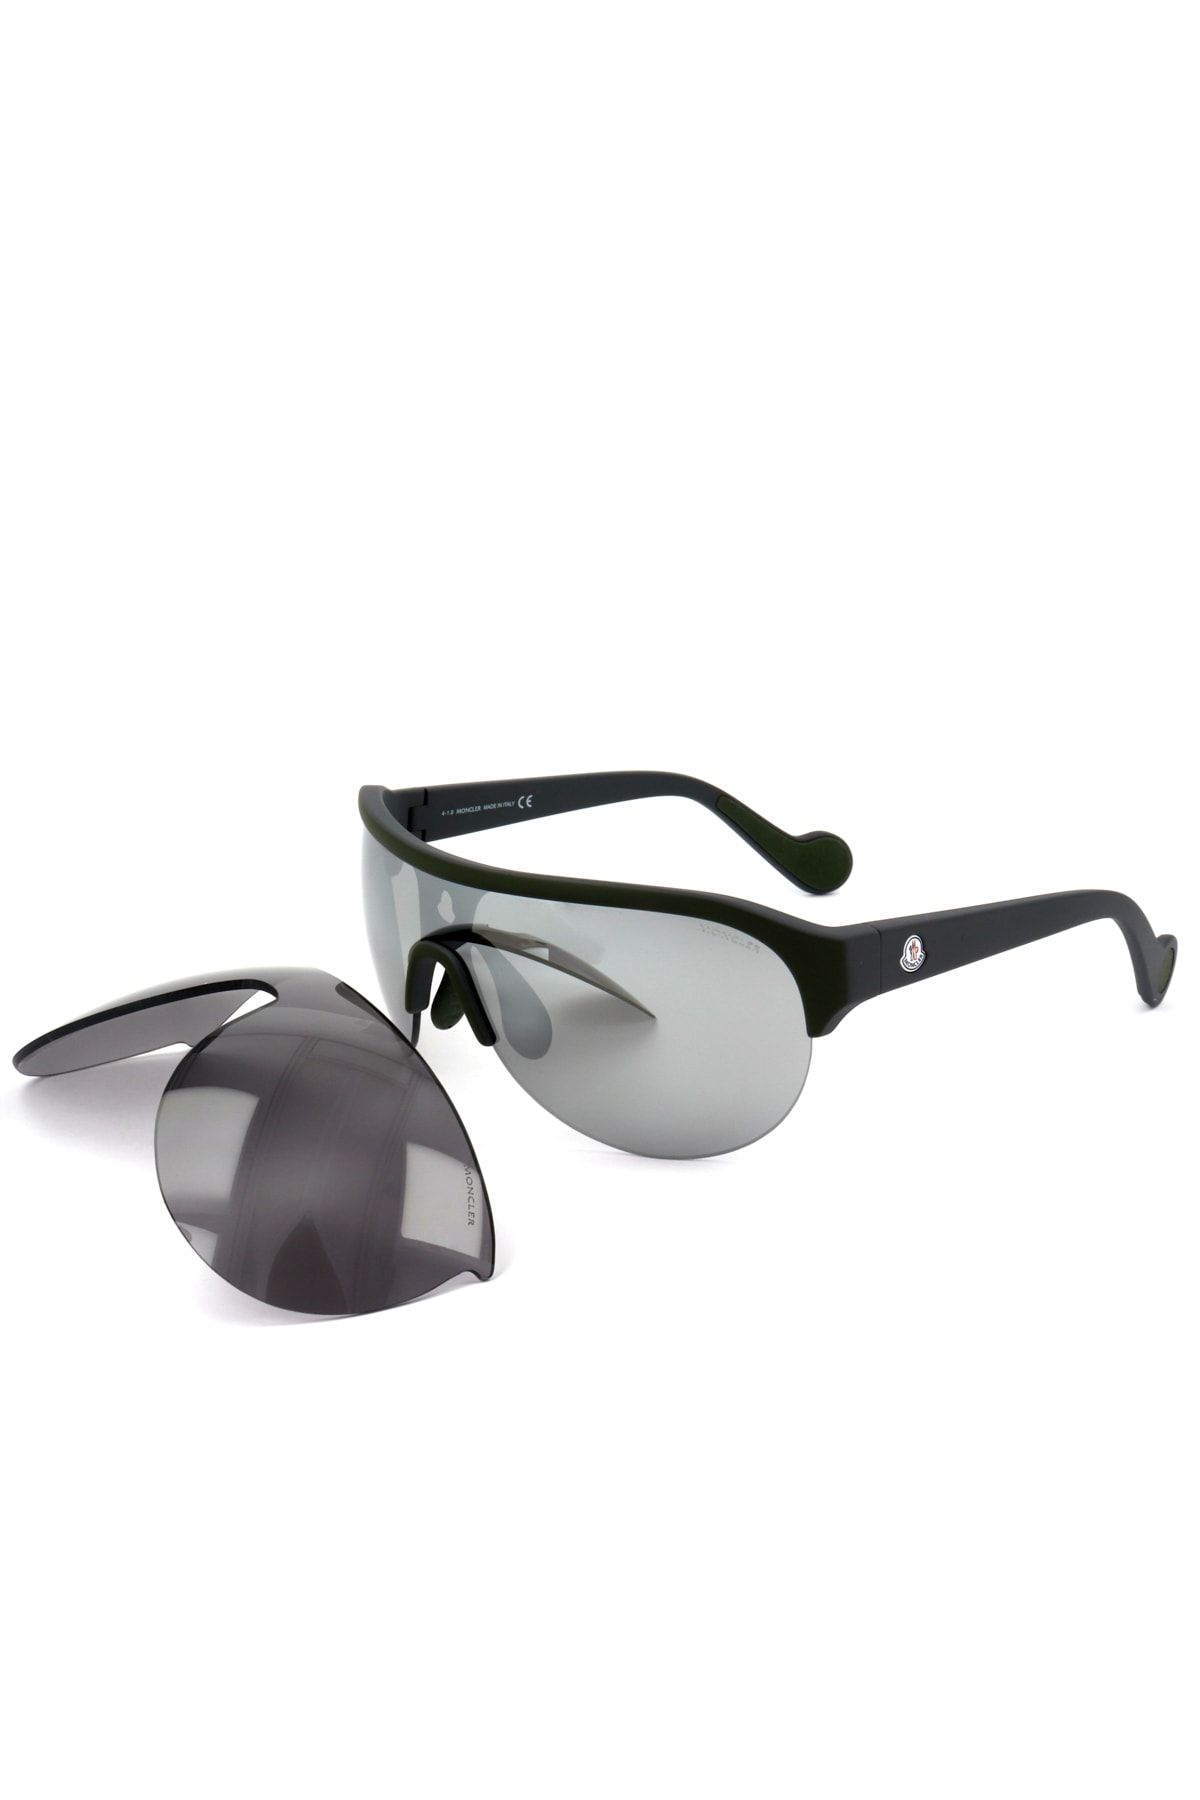 Moncler Sunglasses - Green - Geometric